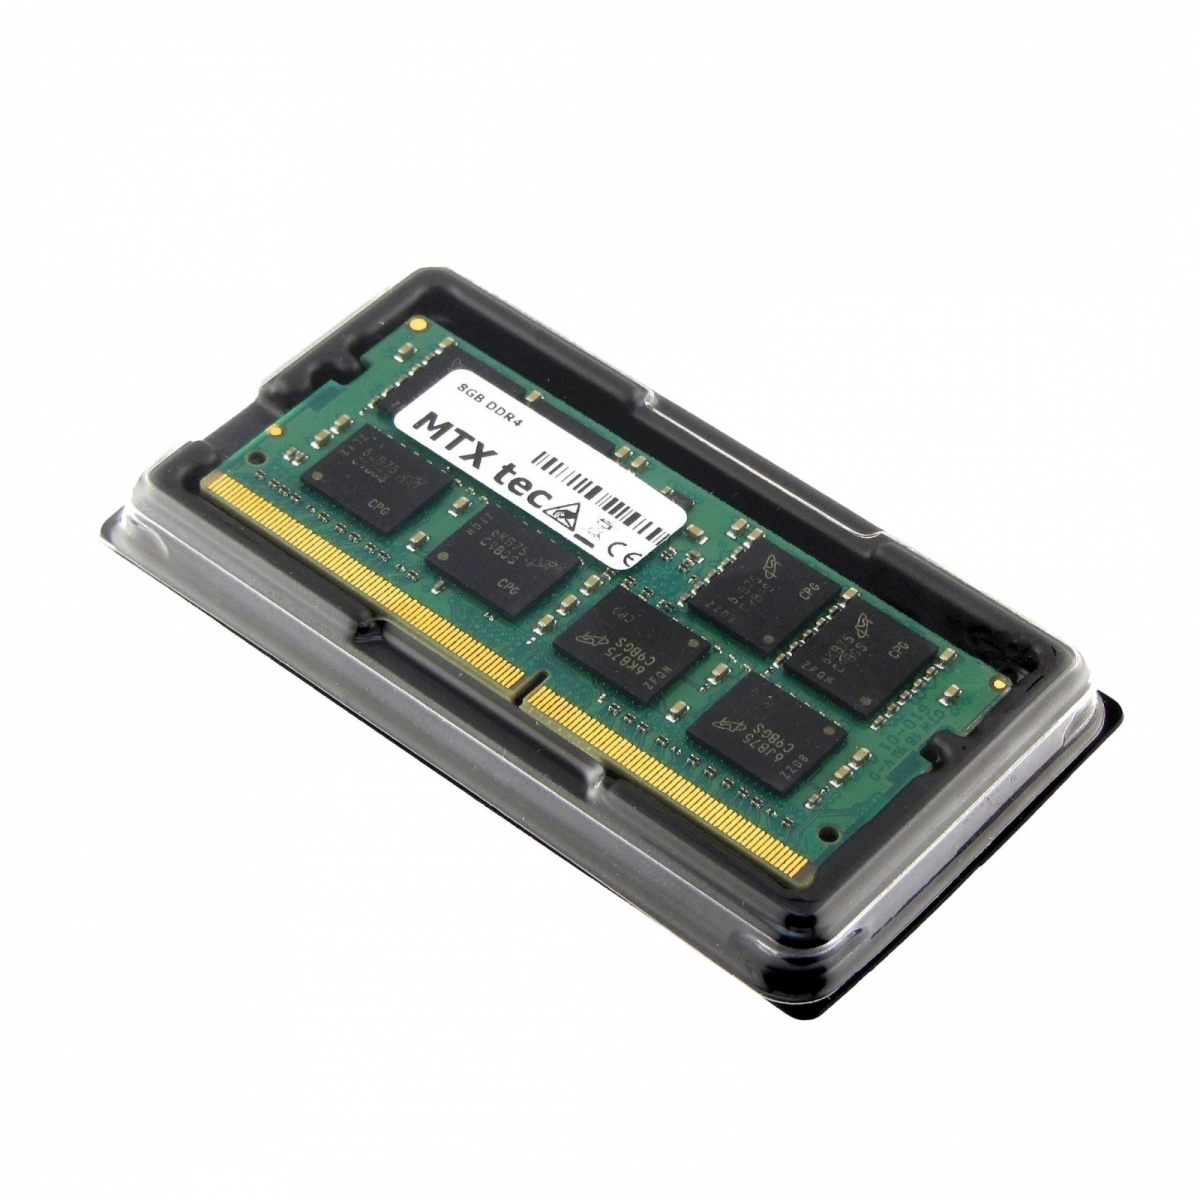 MTXtec Arbeitsspeicher 8 GB RAM für LENOVO ThinkPad T570 20H9, 20HA, 20JW, 20JX